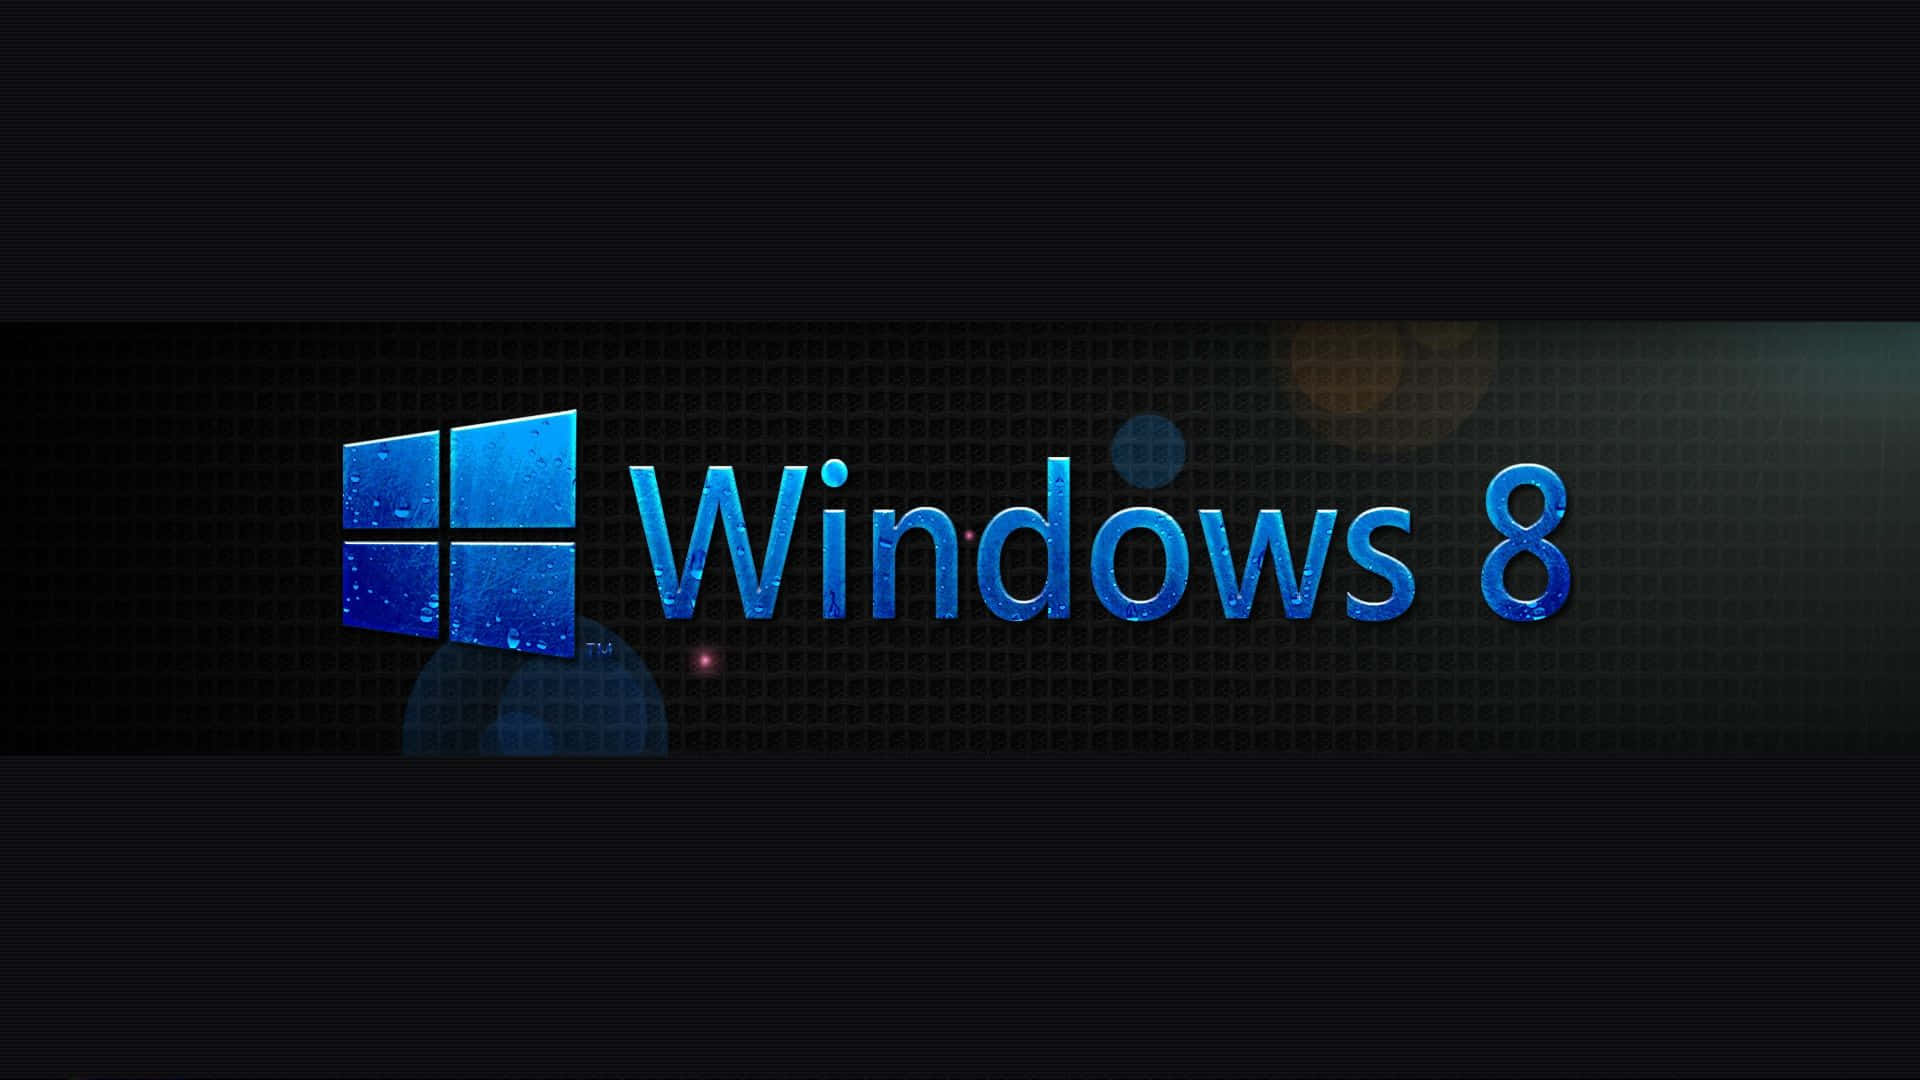 Modern Windows 8 Interface Background